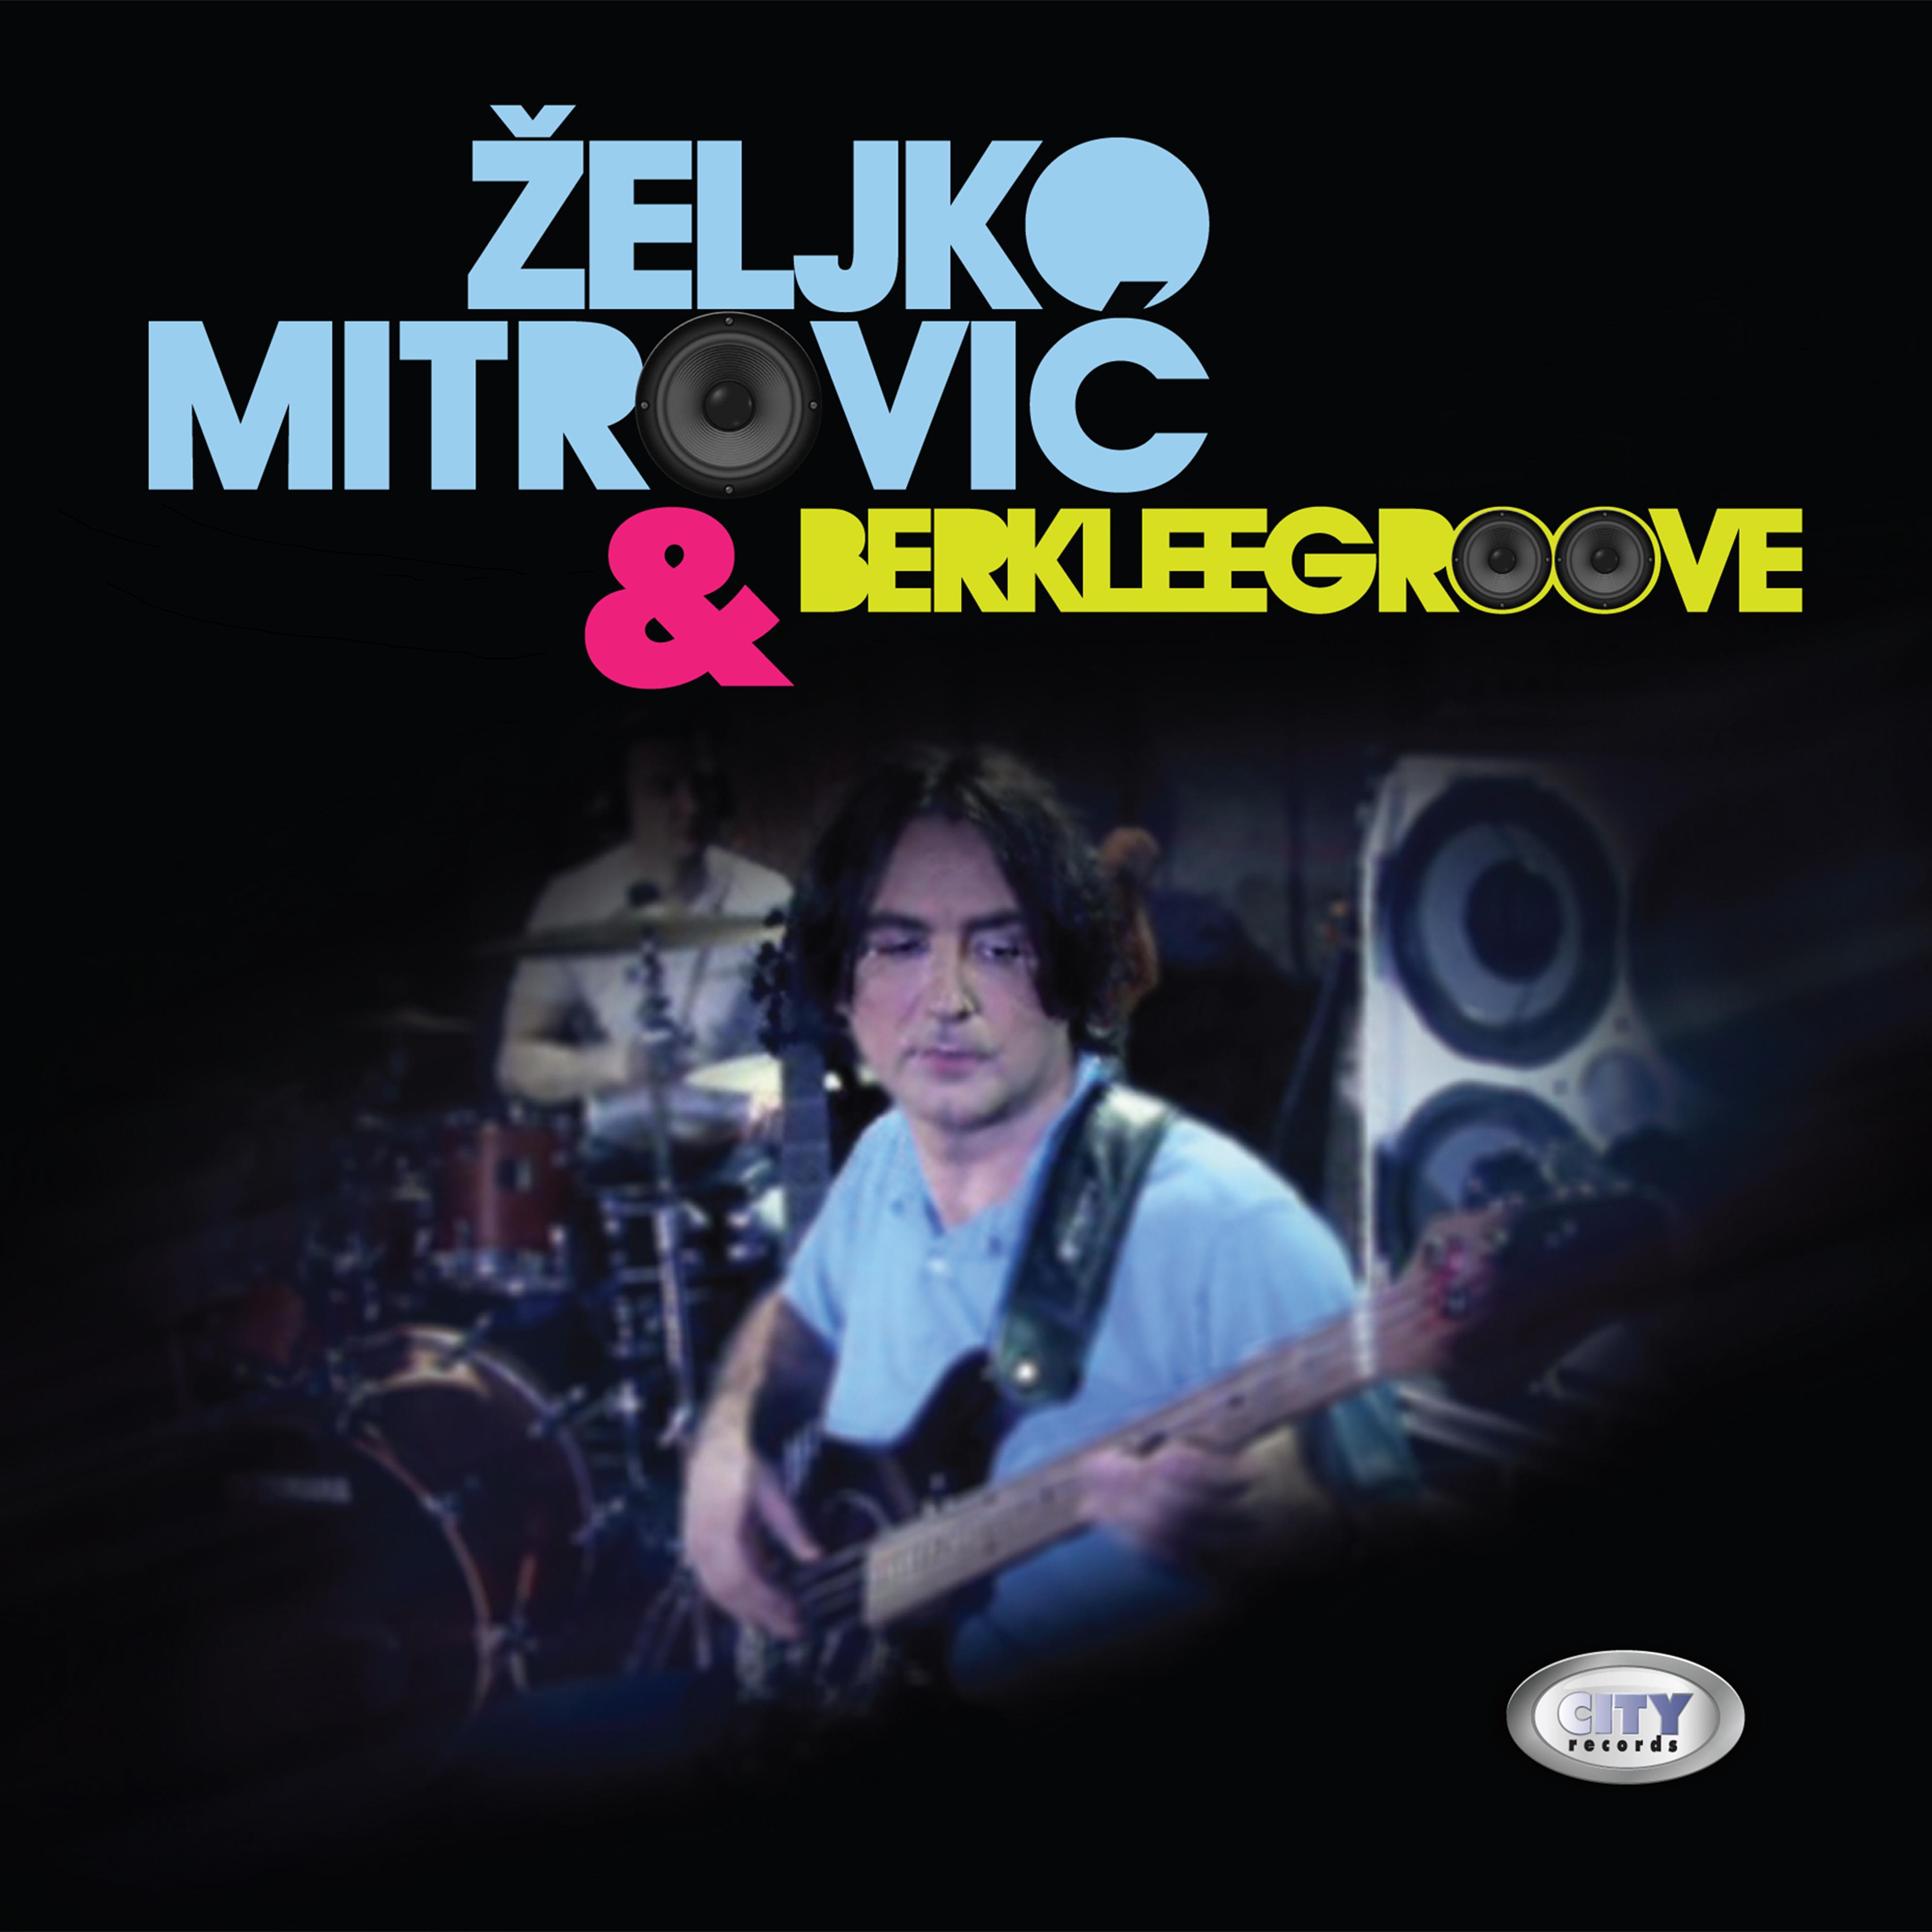 eljko Mitrovi i Berklee Groove